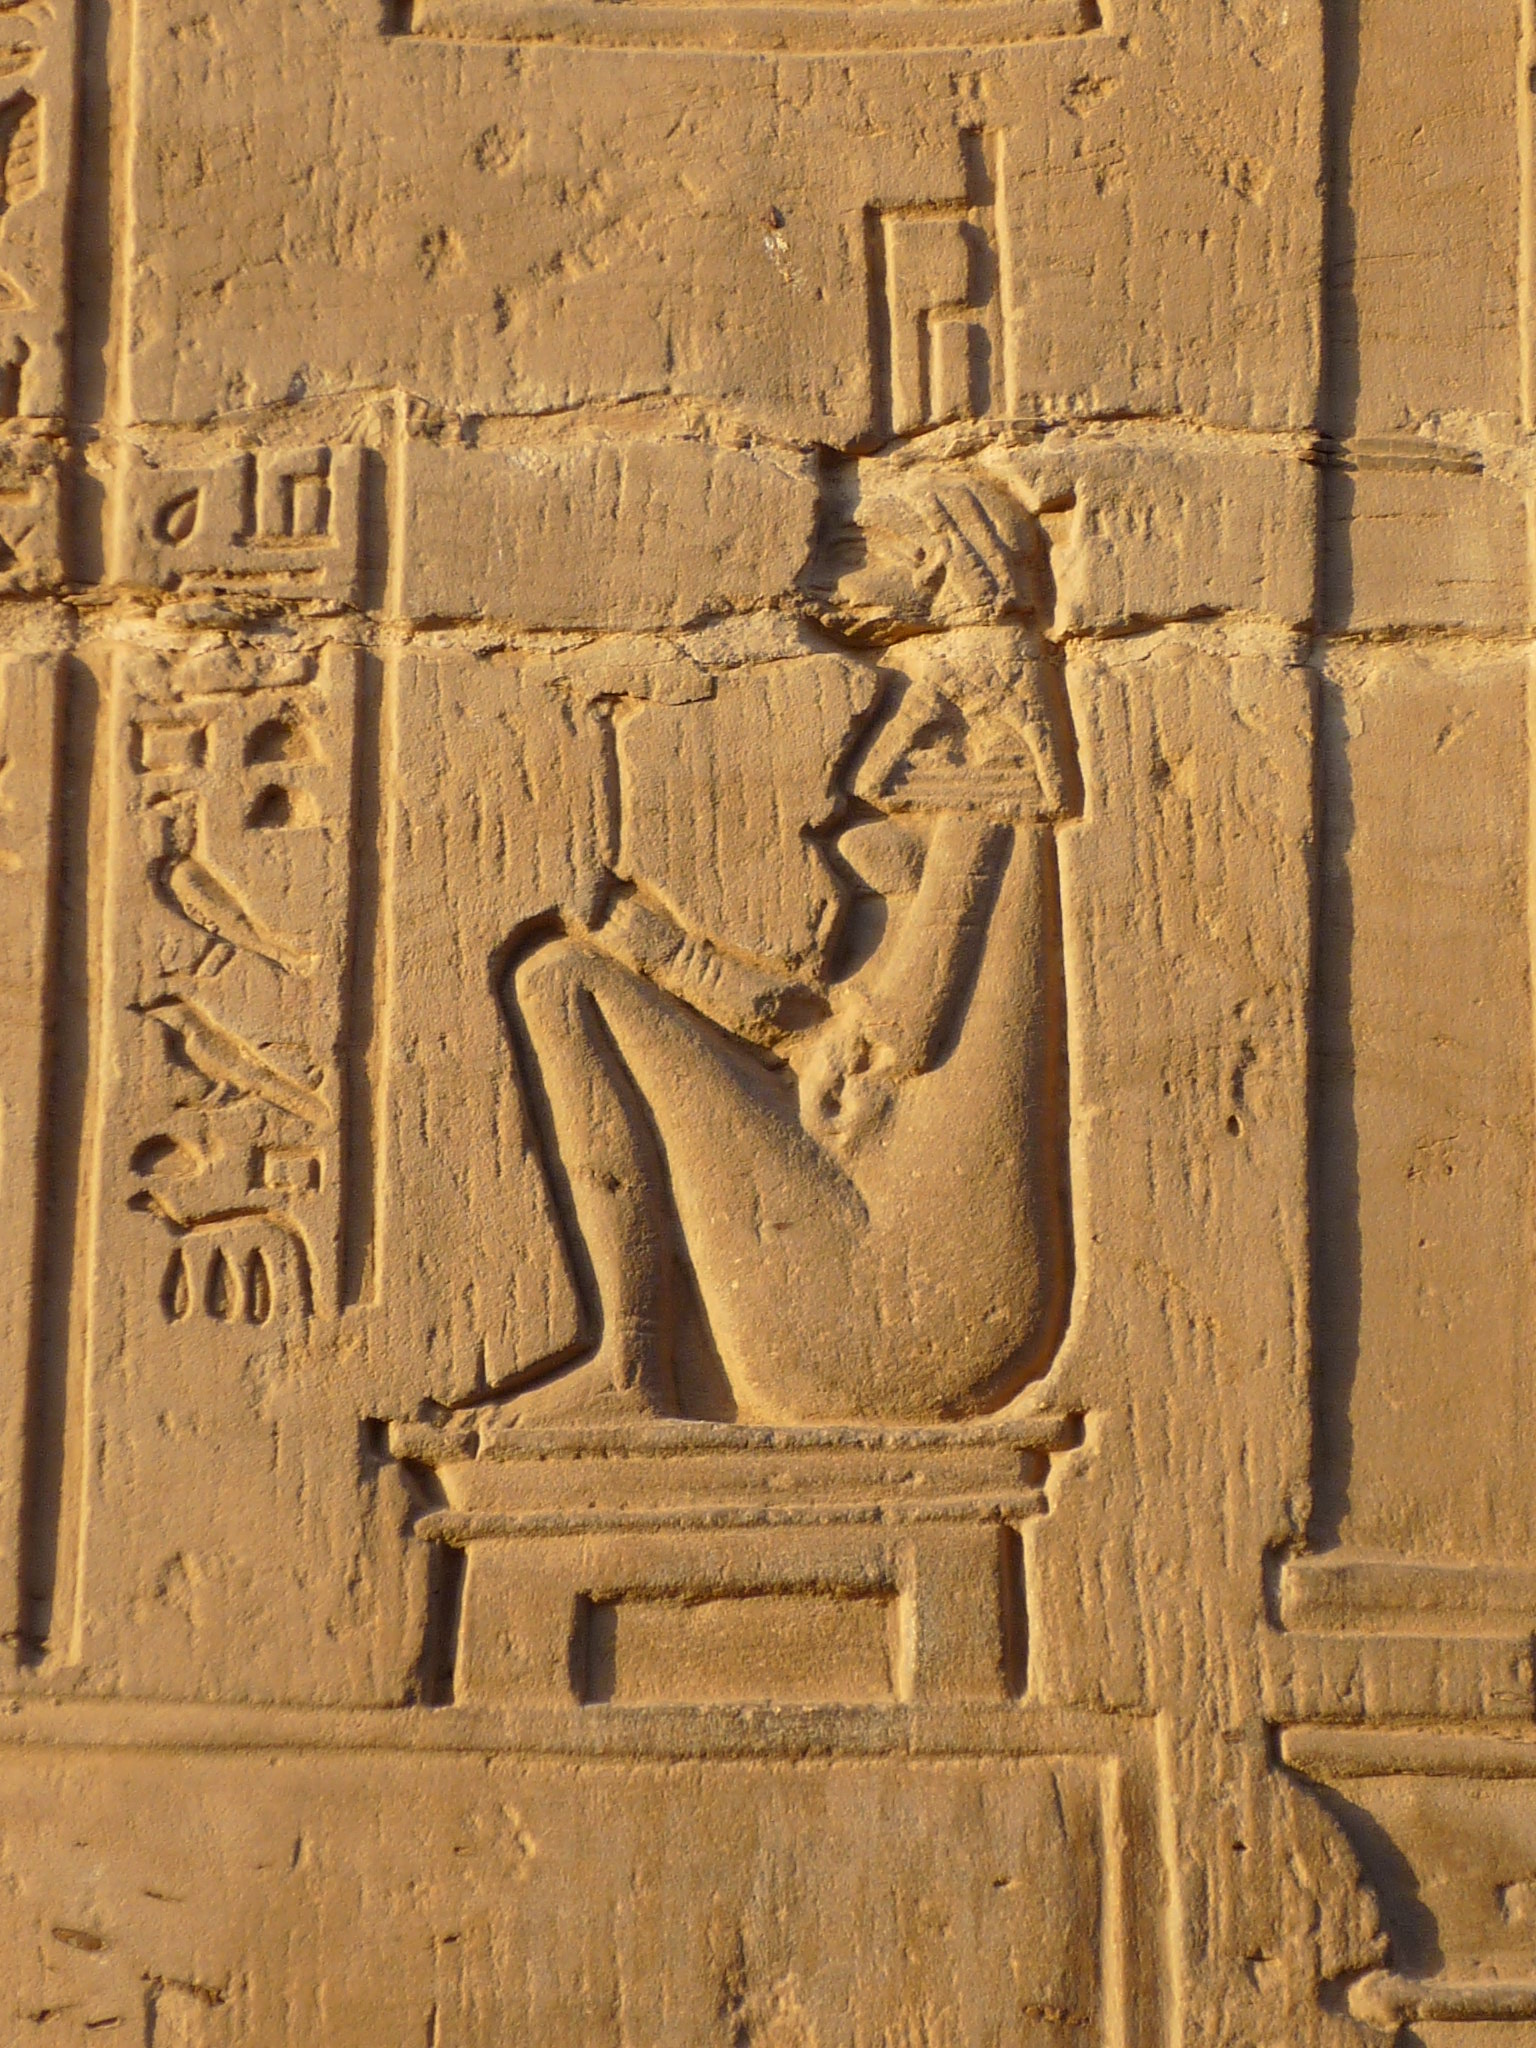 Egyptian Woman Giving Birth Illustration World History Encyclopedia